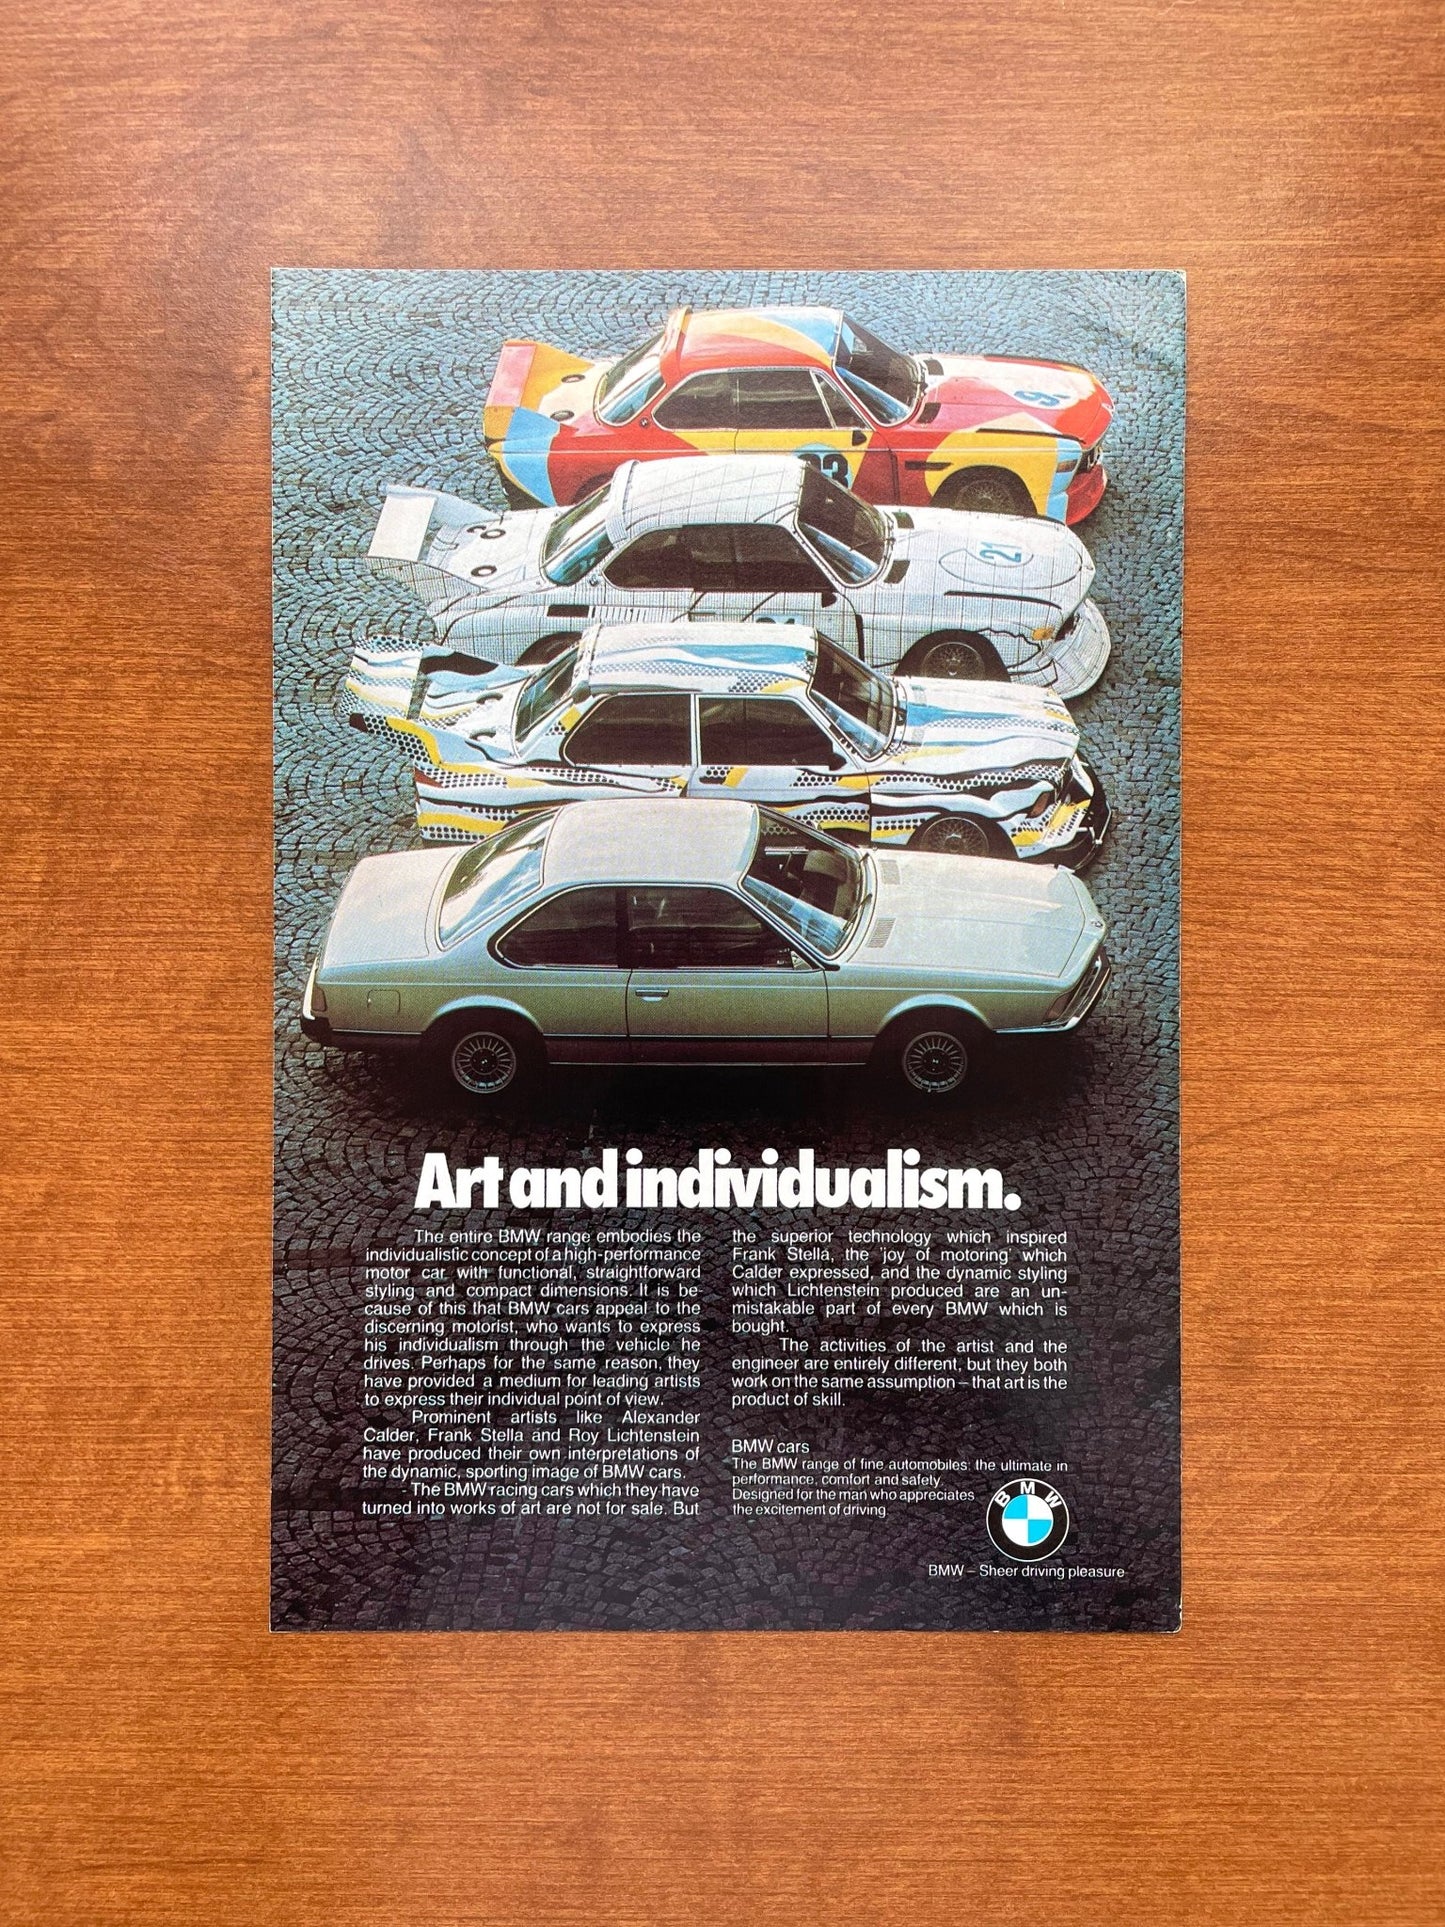 1978 BMW "Art and individualism." Advertisement